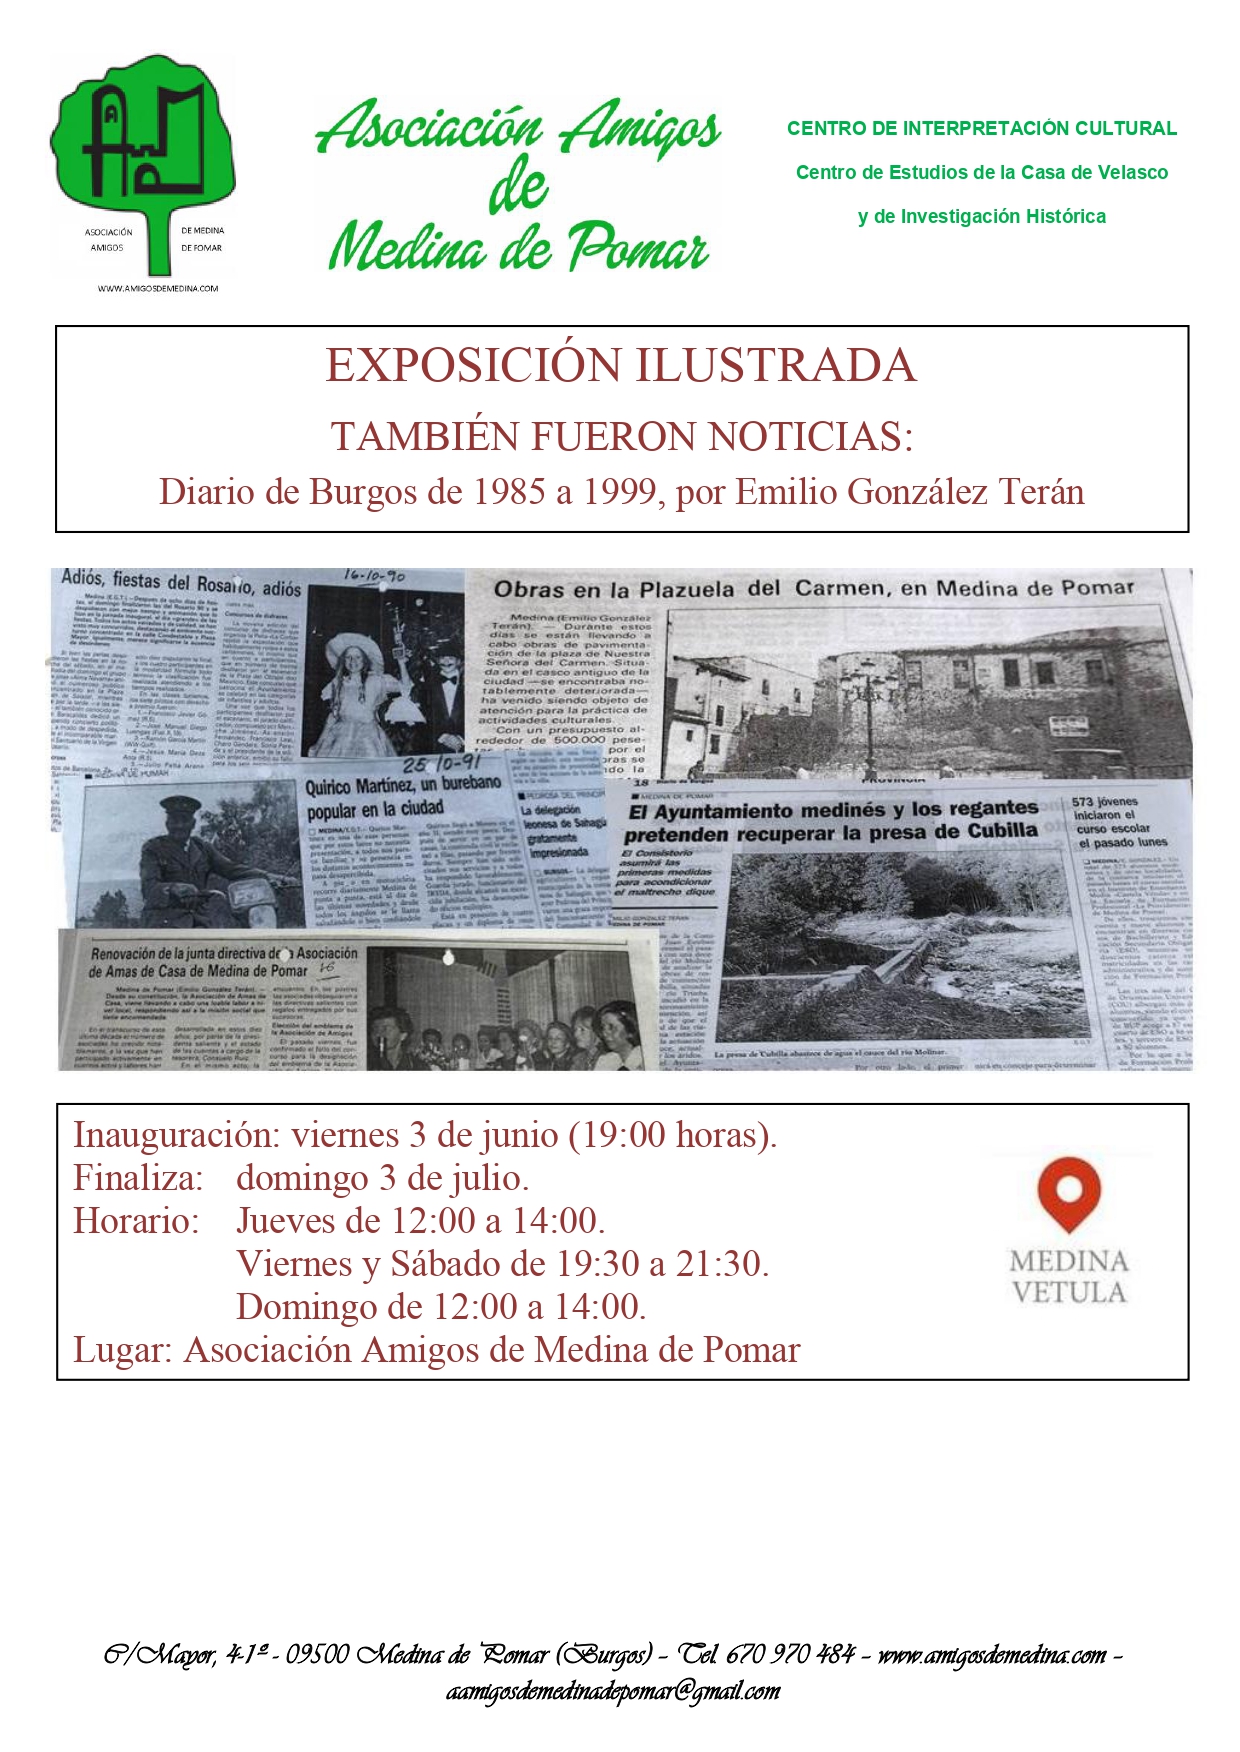 Exposición ilustrada. También fueron noticias: Diario de Burgos de 1985 a 1999, por Emilio González Terán